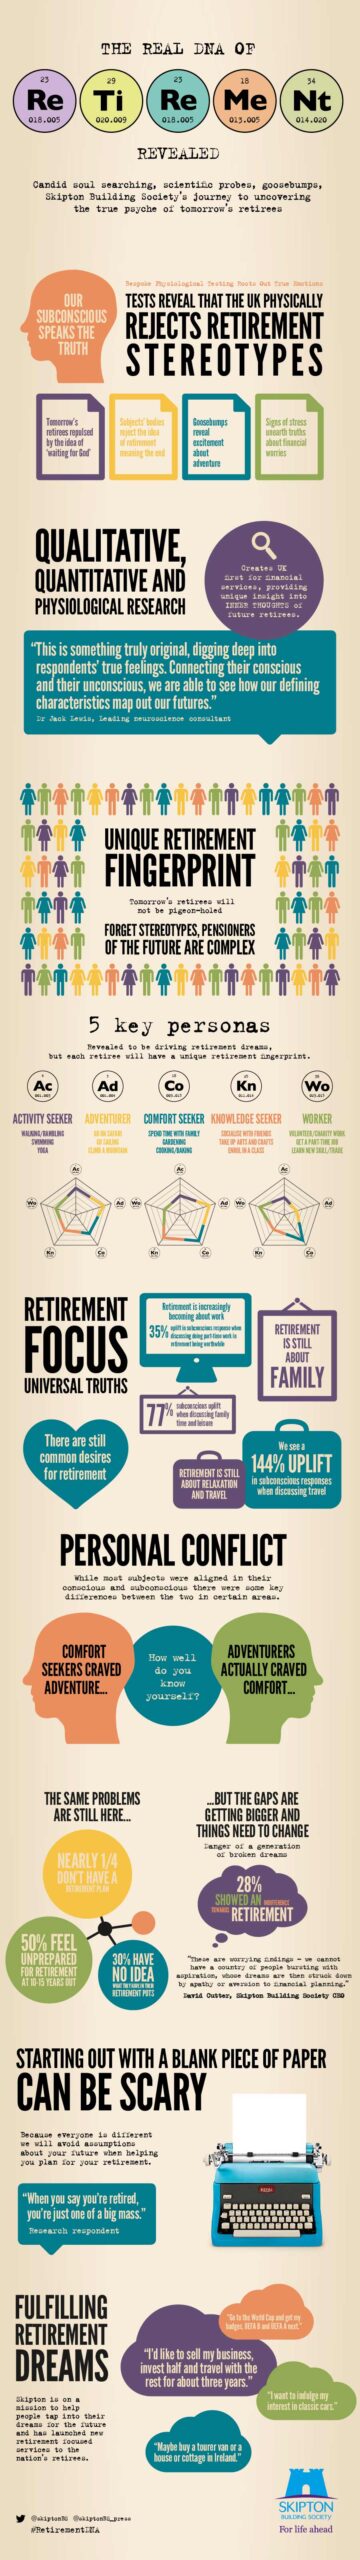 Planning for retirement infographic | Preparing for retirement, Retirement planning, How to plan